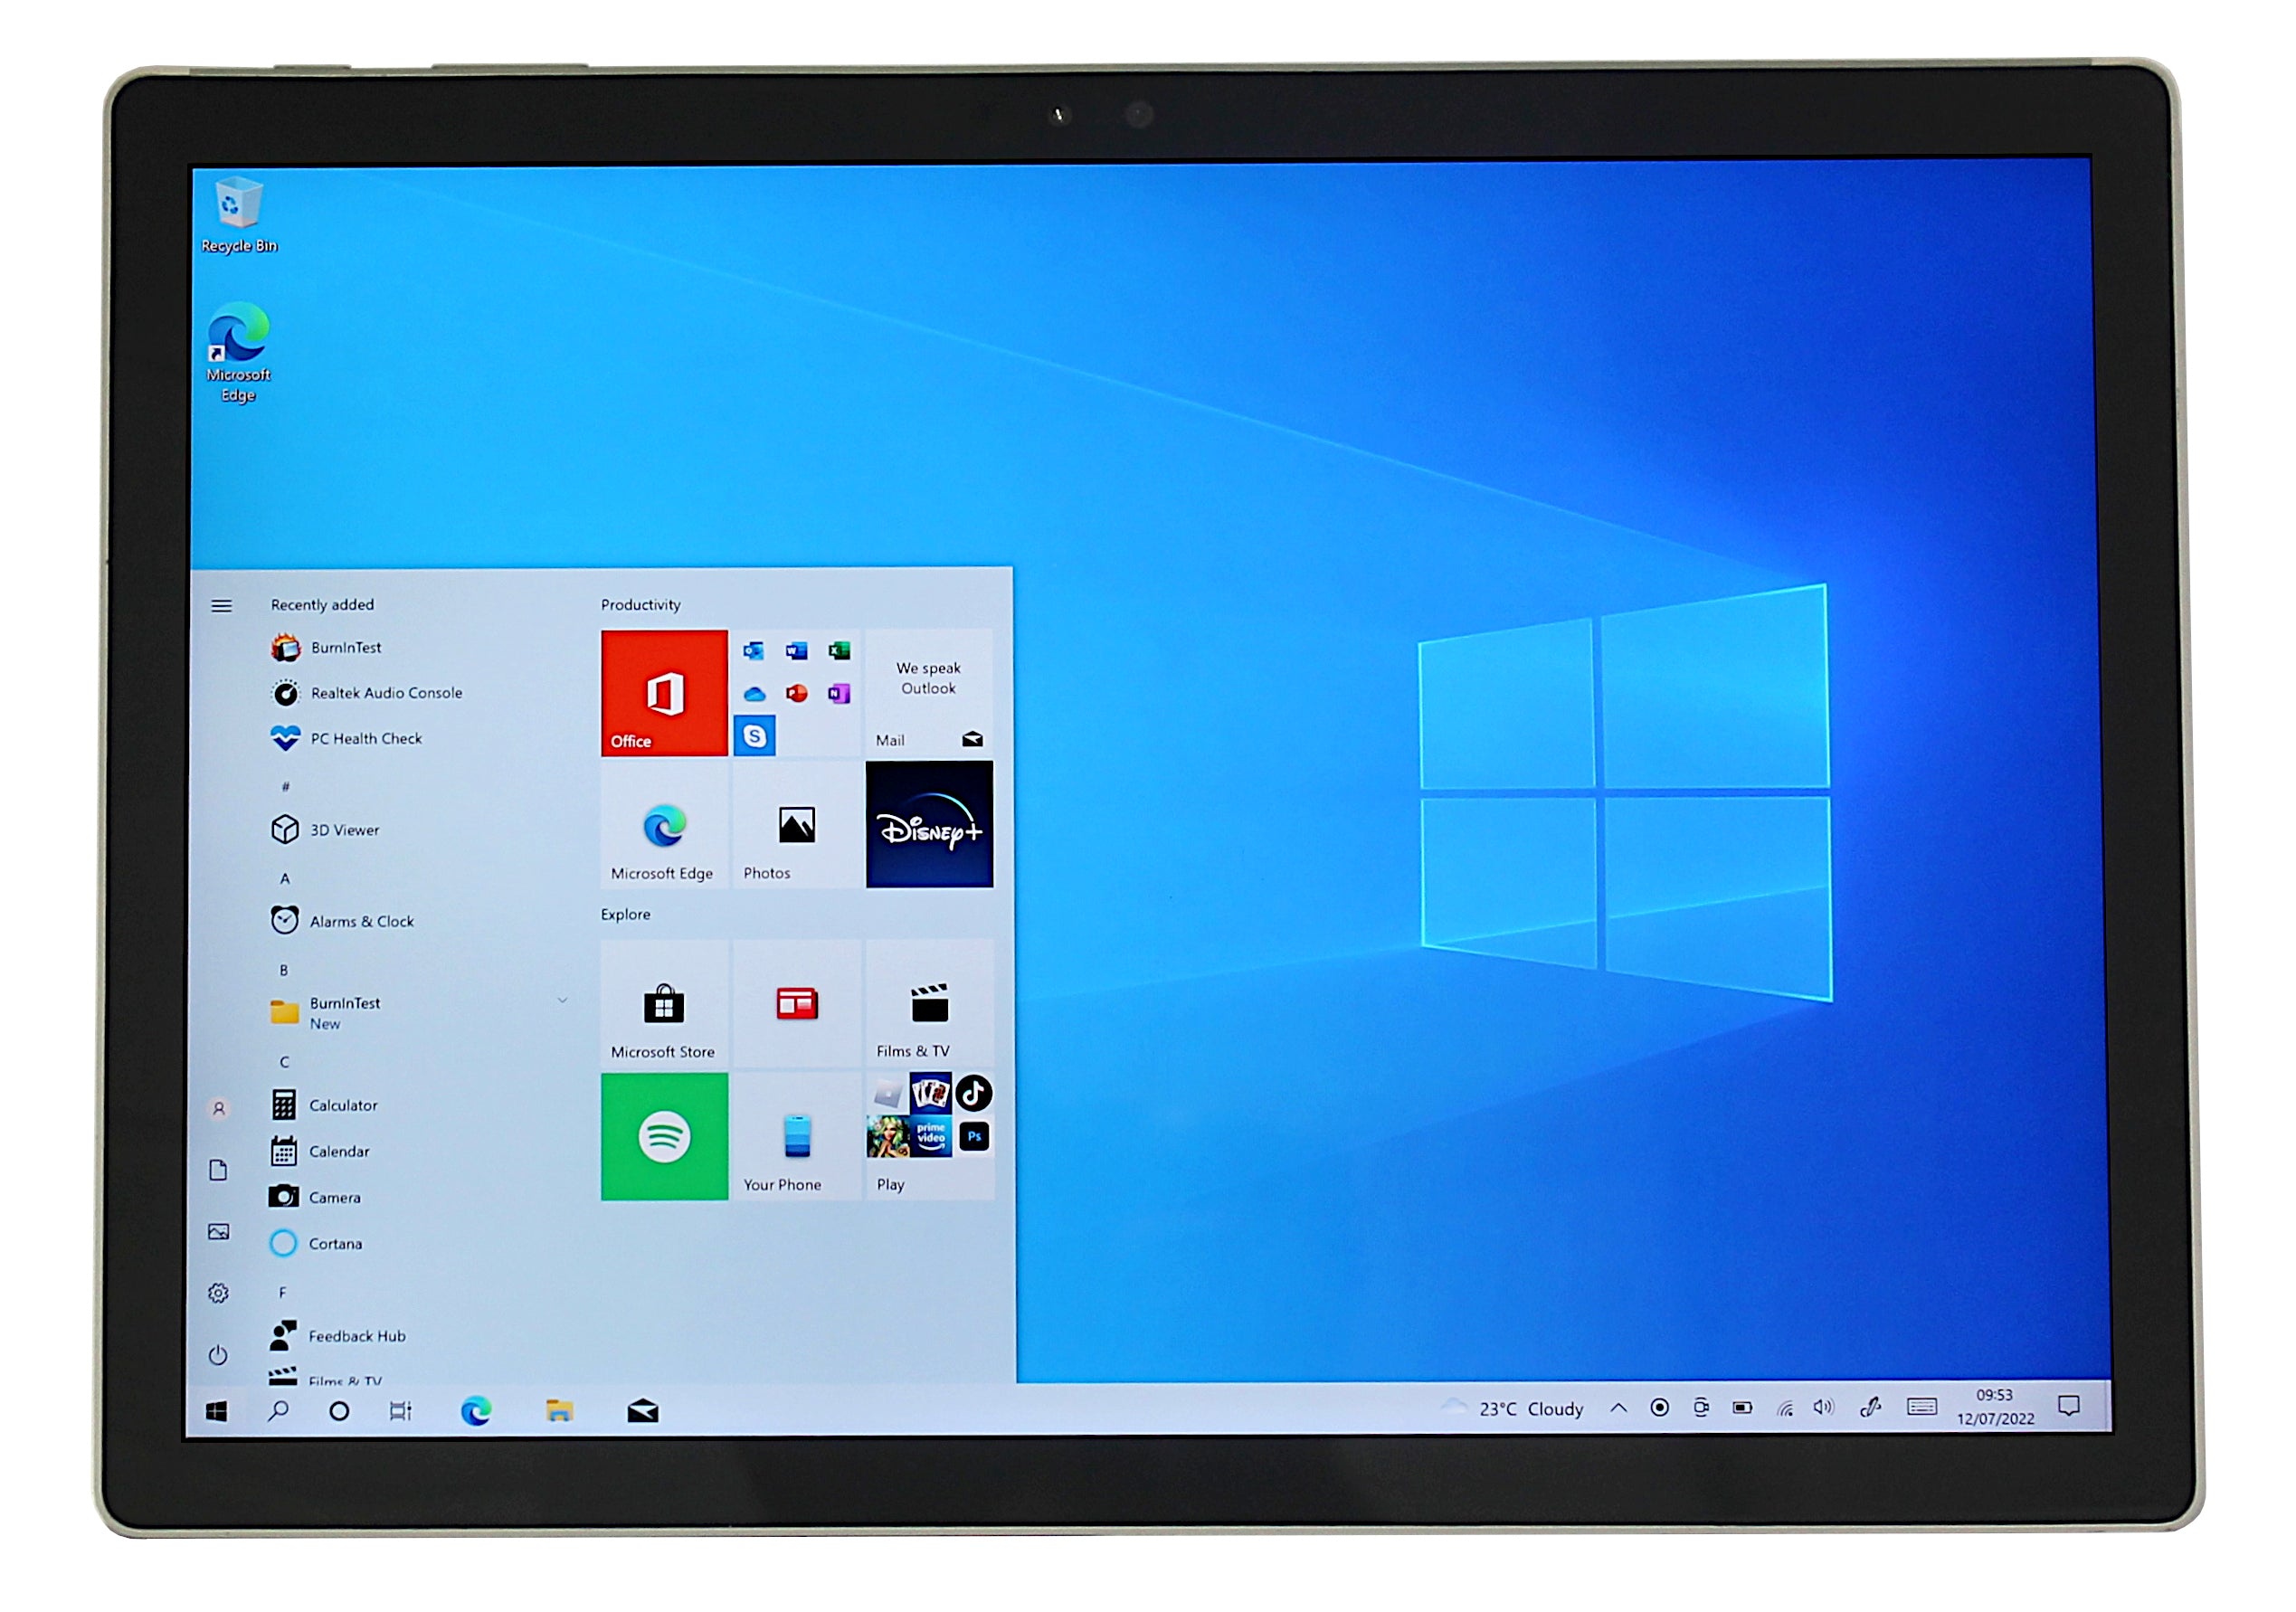 Microsoft Surface Book 2, 13" Intel Core i5, 8GB RAM, 256GB SSD, Windows 10